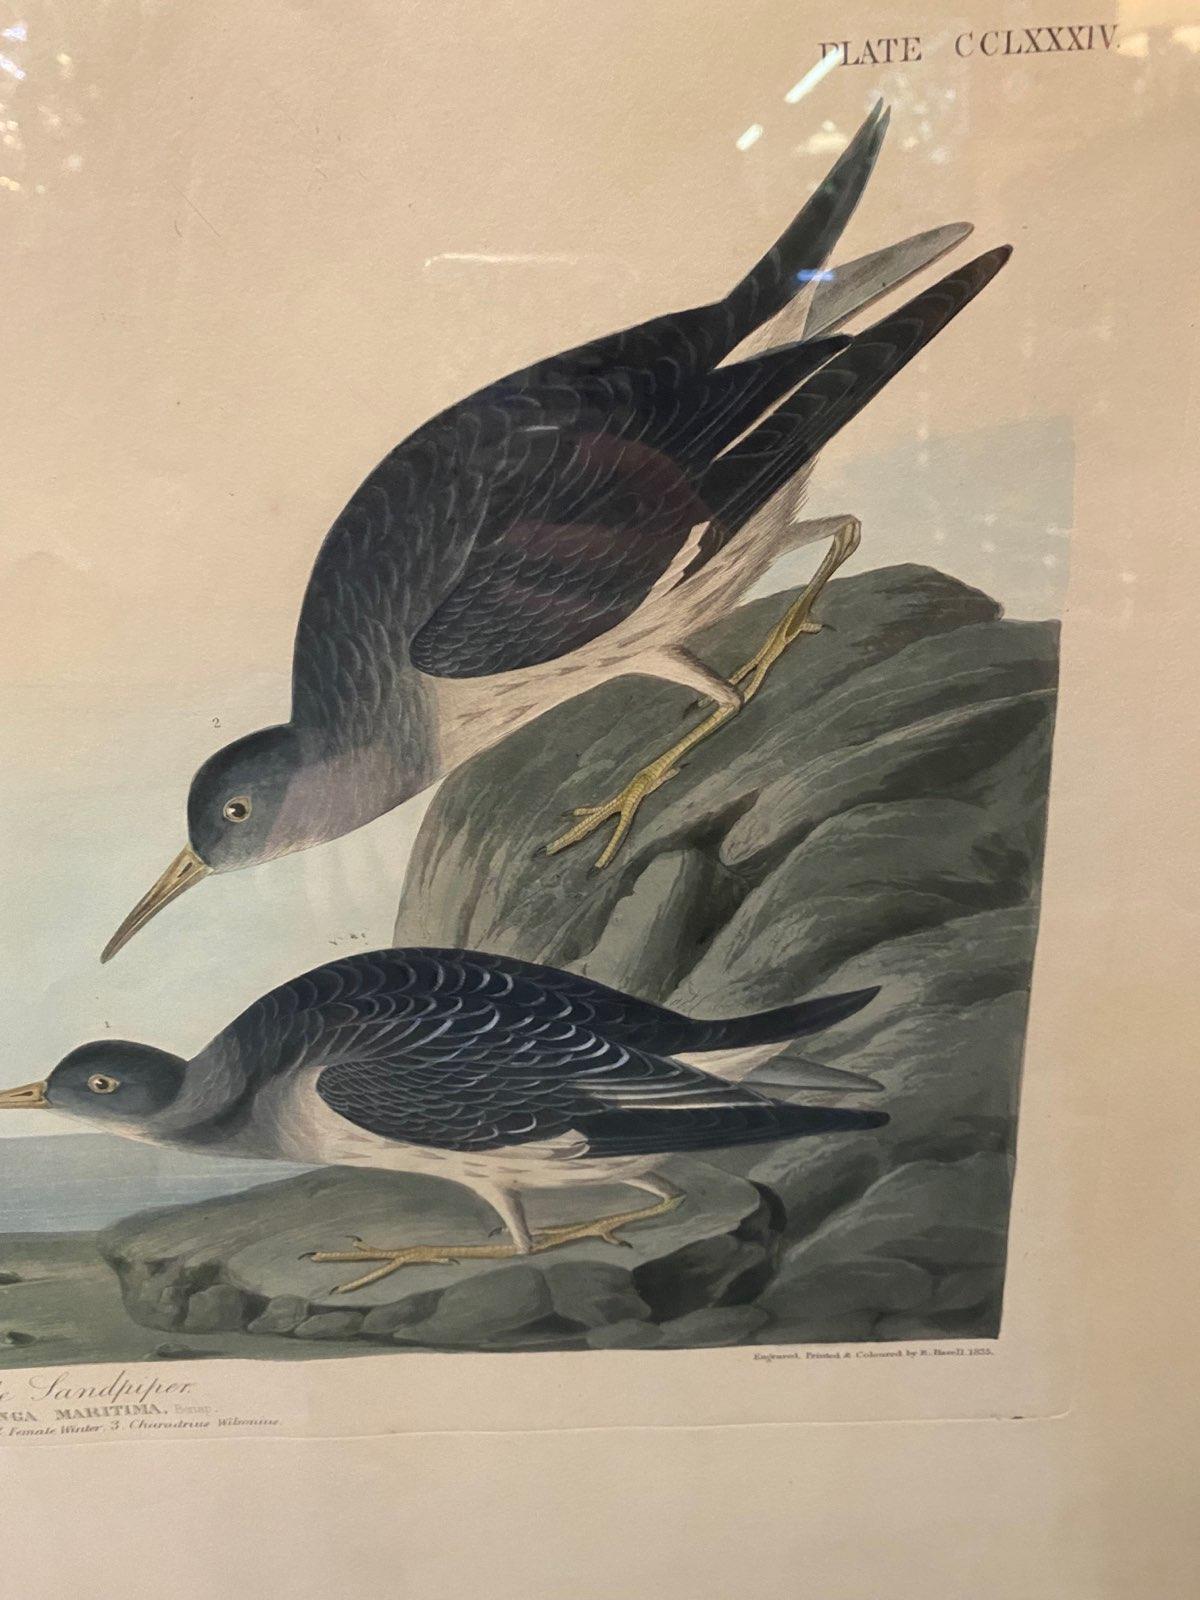 Paper Early 19th Century Audubon Sandpiper Aquatint Printed & Hand Colored Print